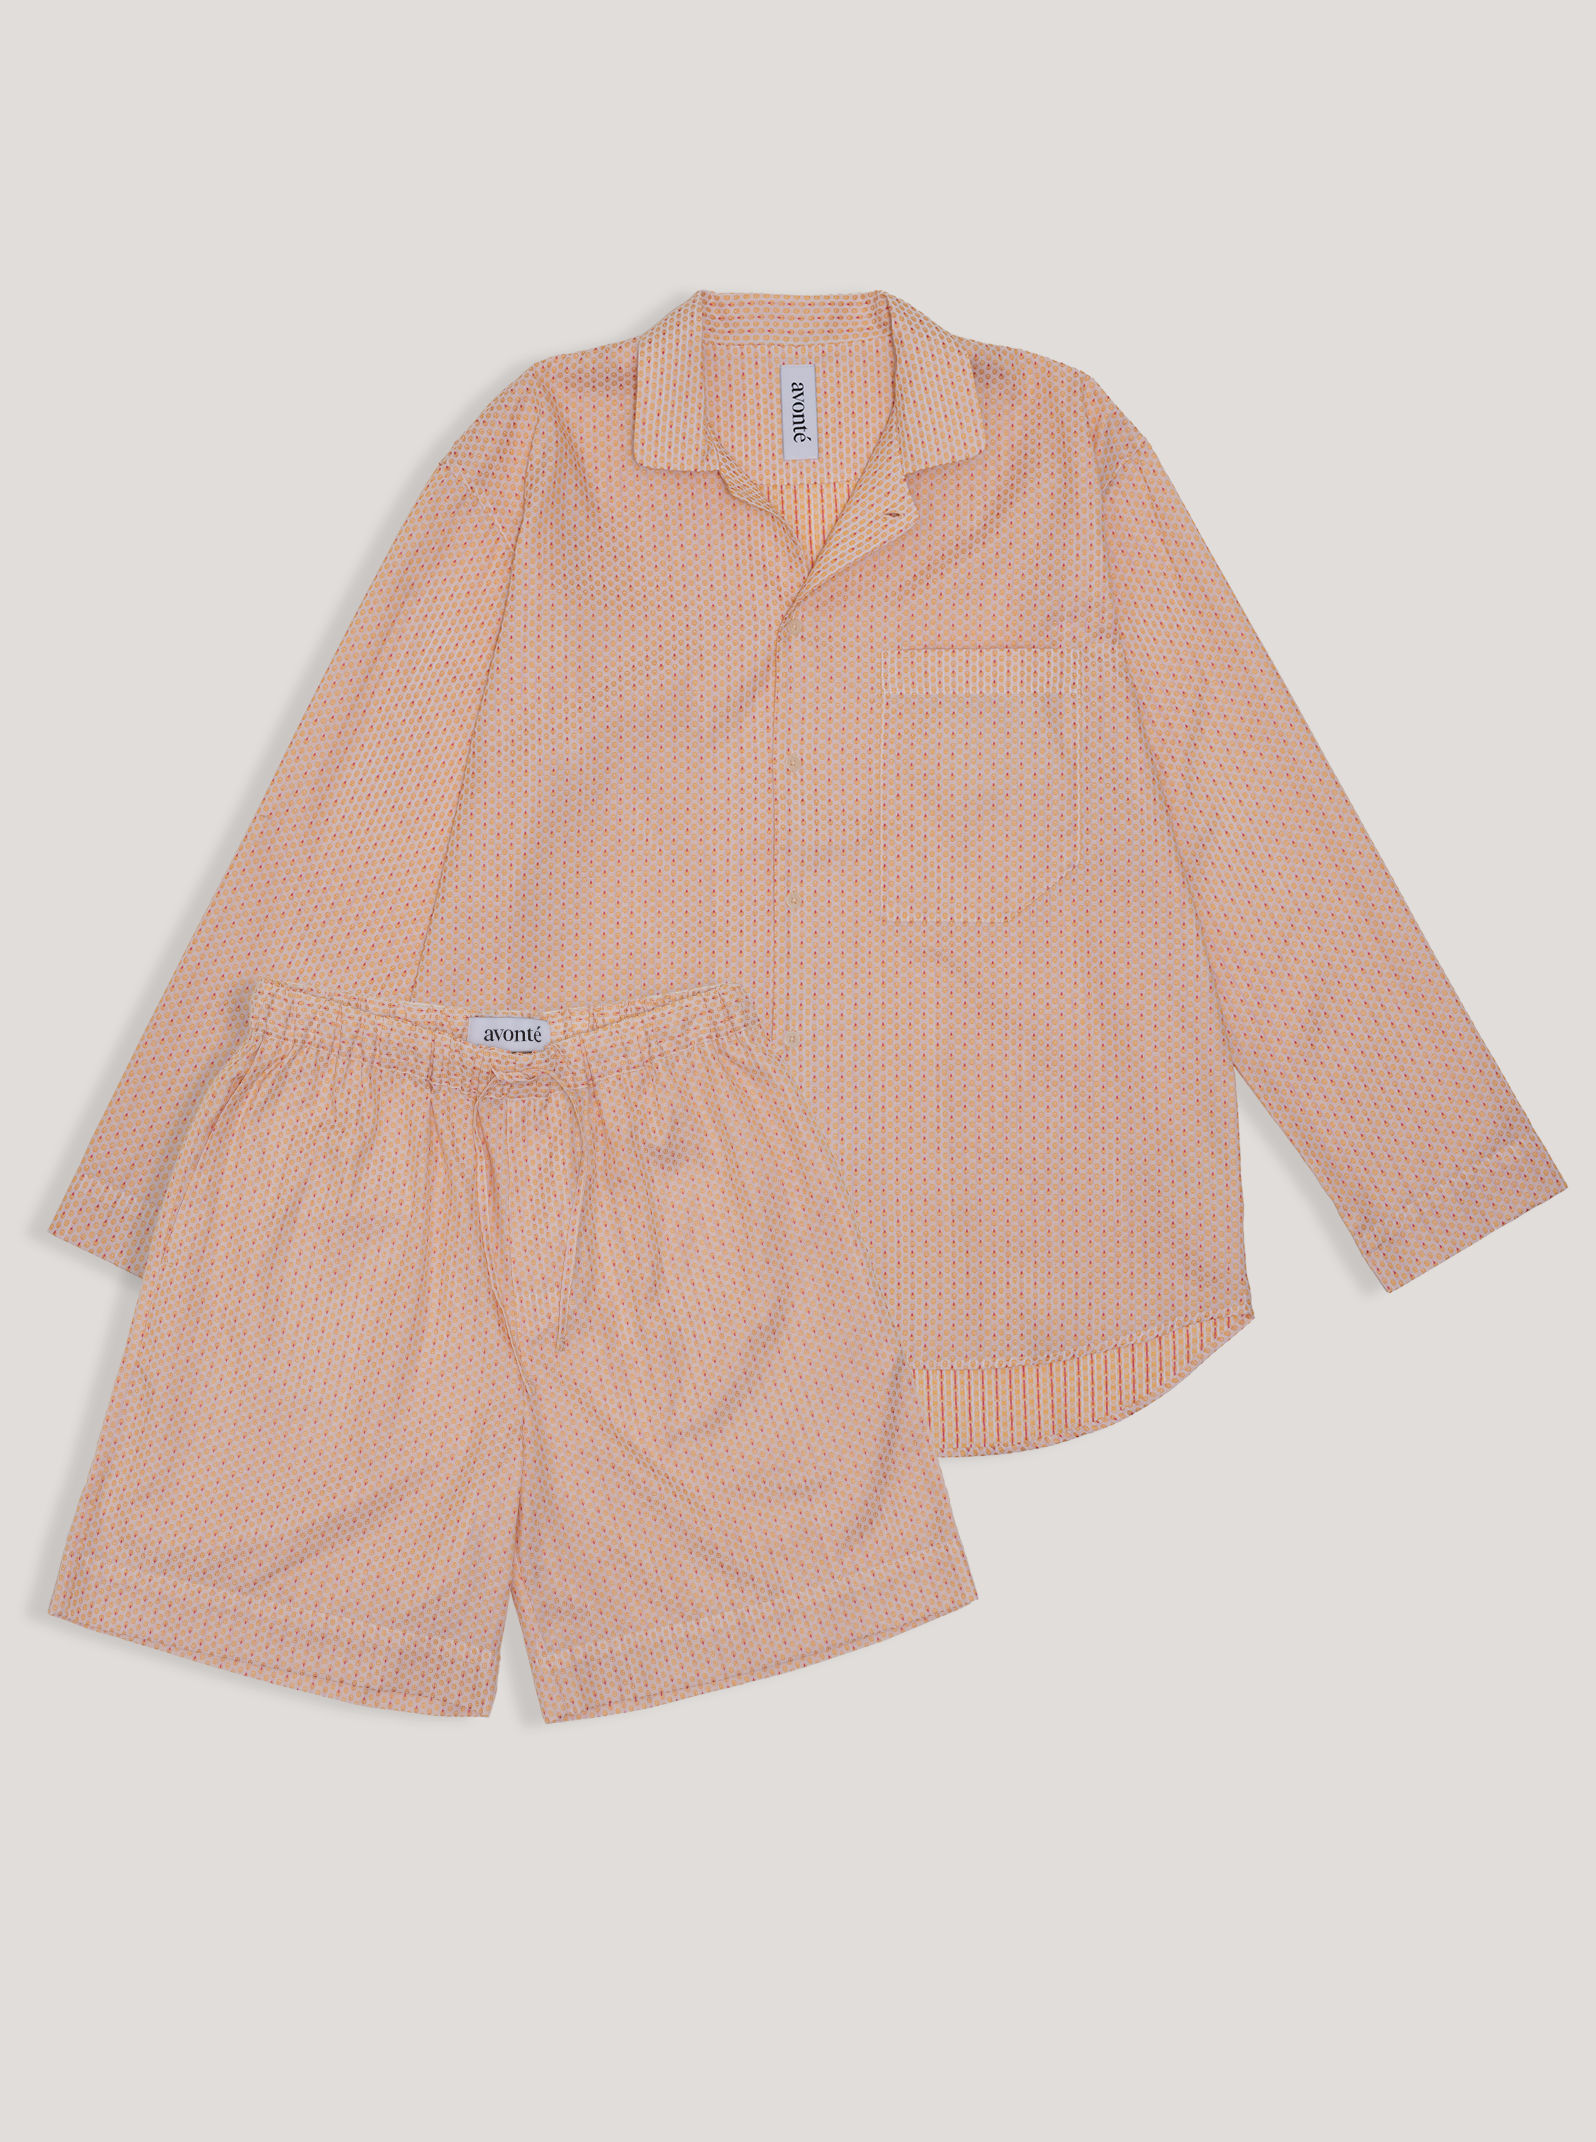 Pyjama Set (Shirt+ Shorts) - summer smiles